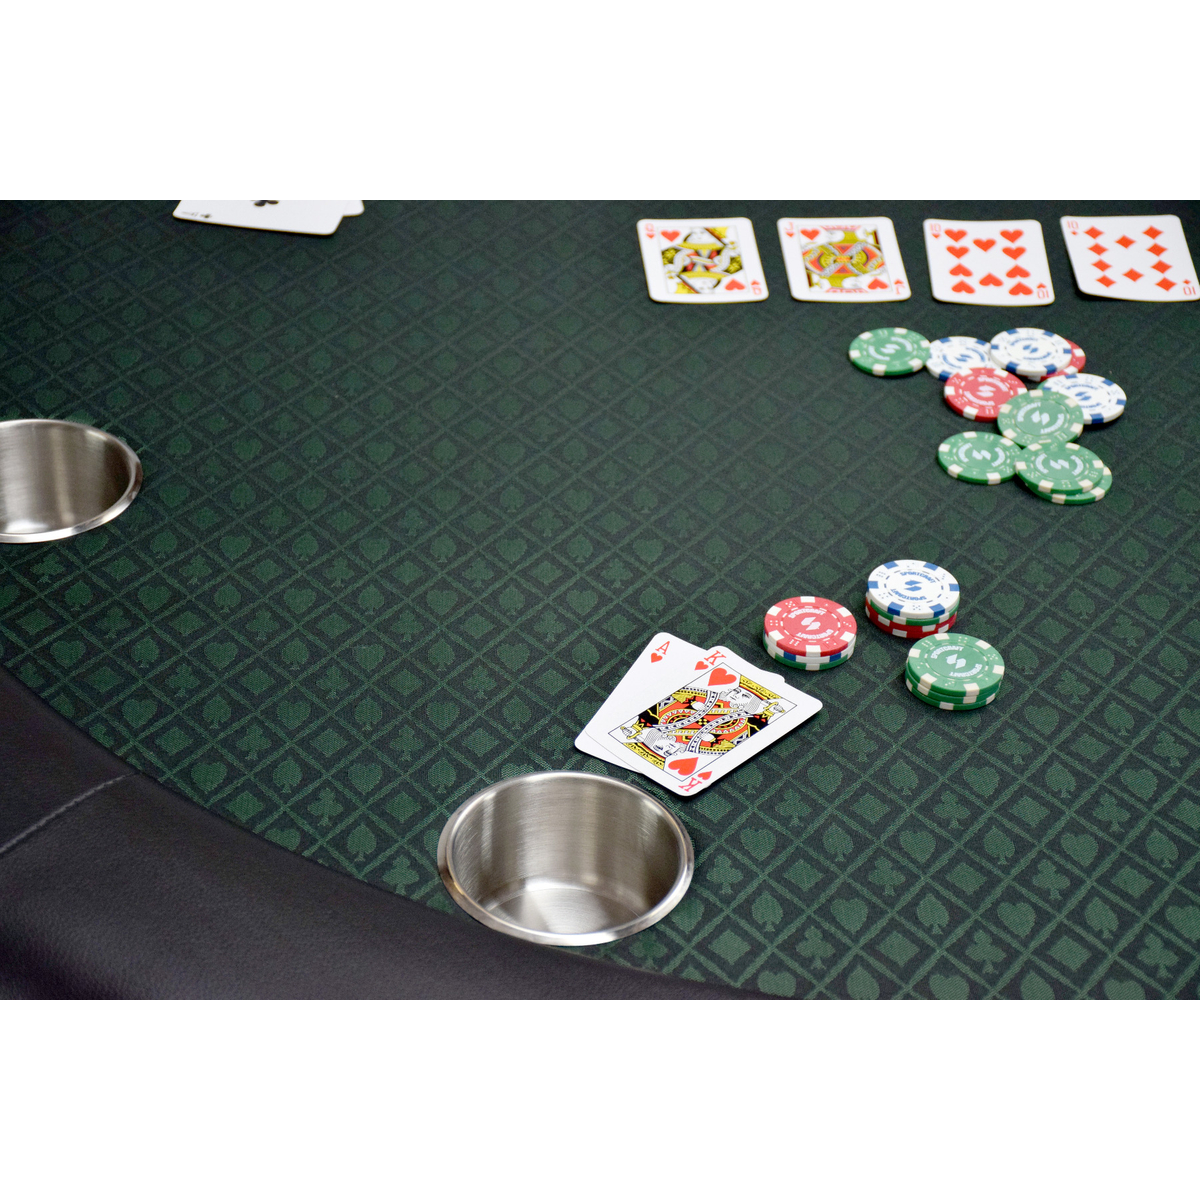 North Ronde Pokertafel Texas 8 Personen Groen